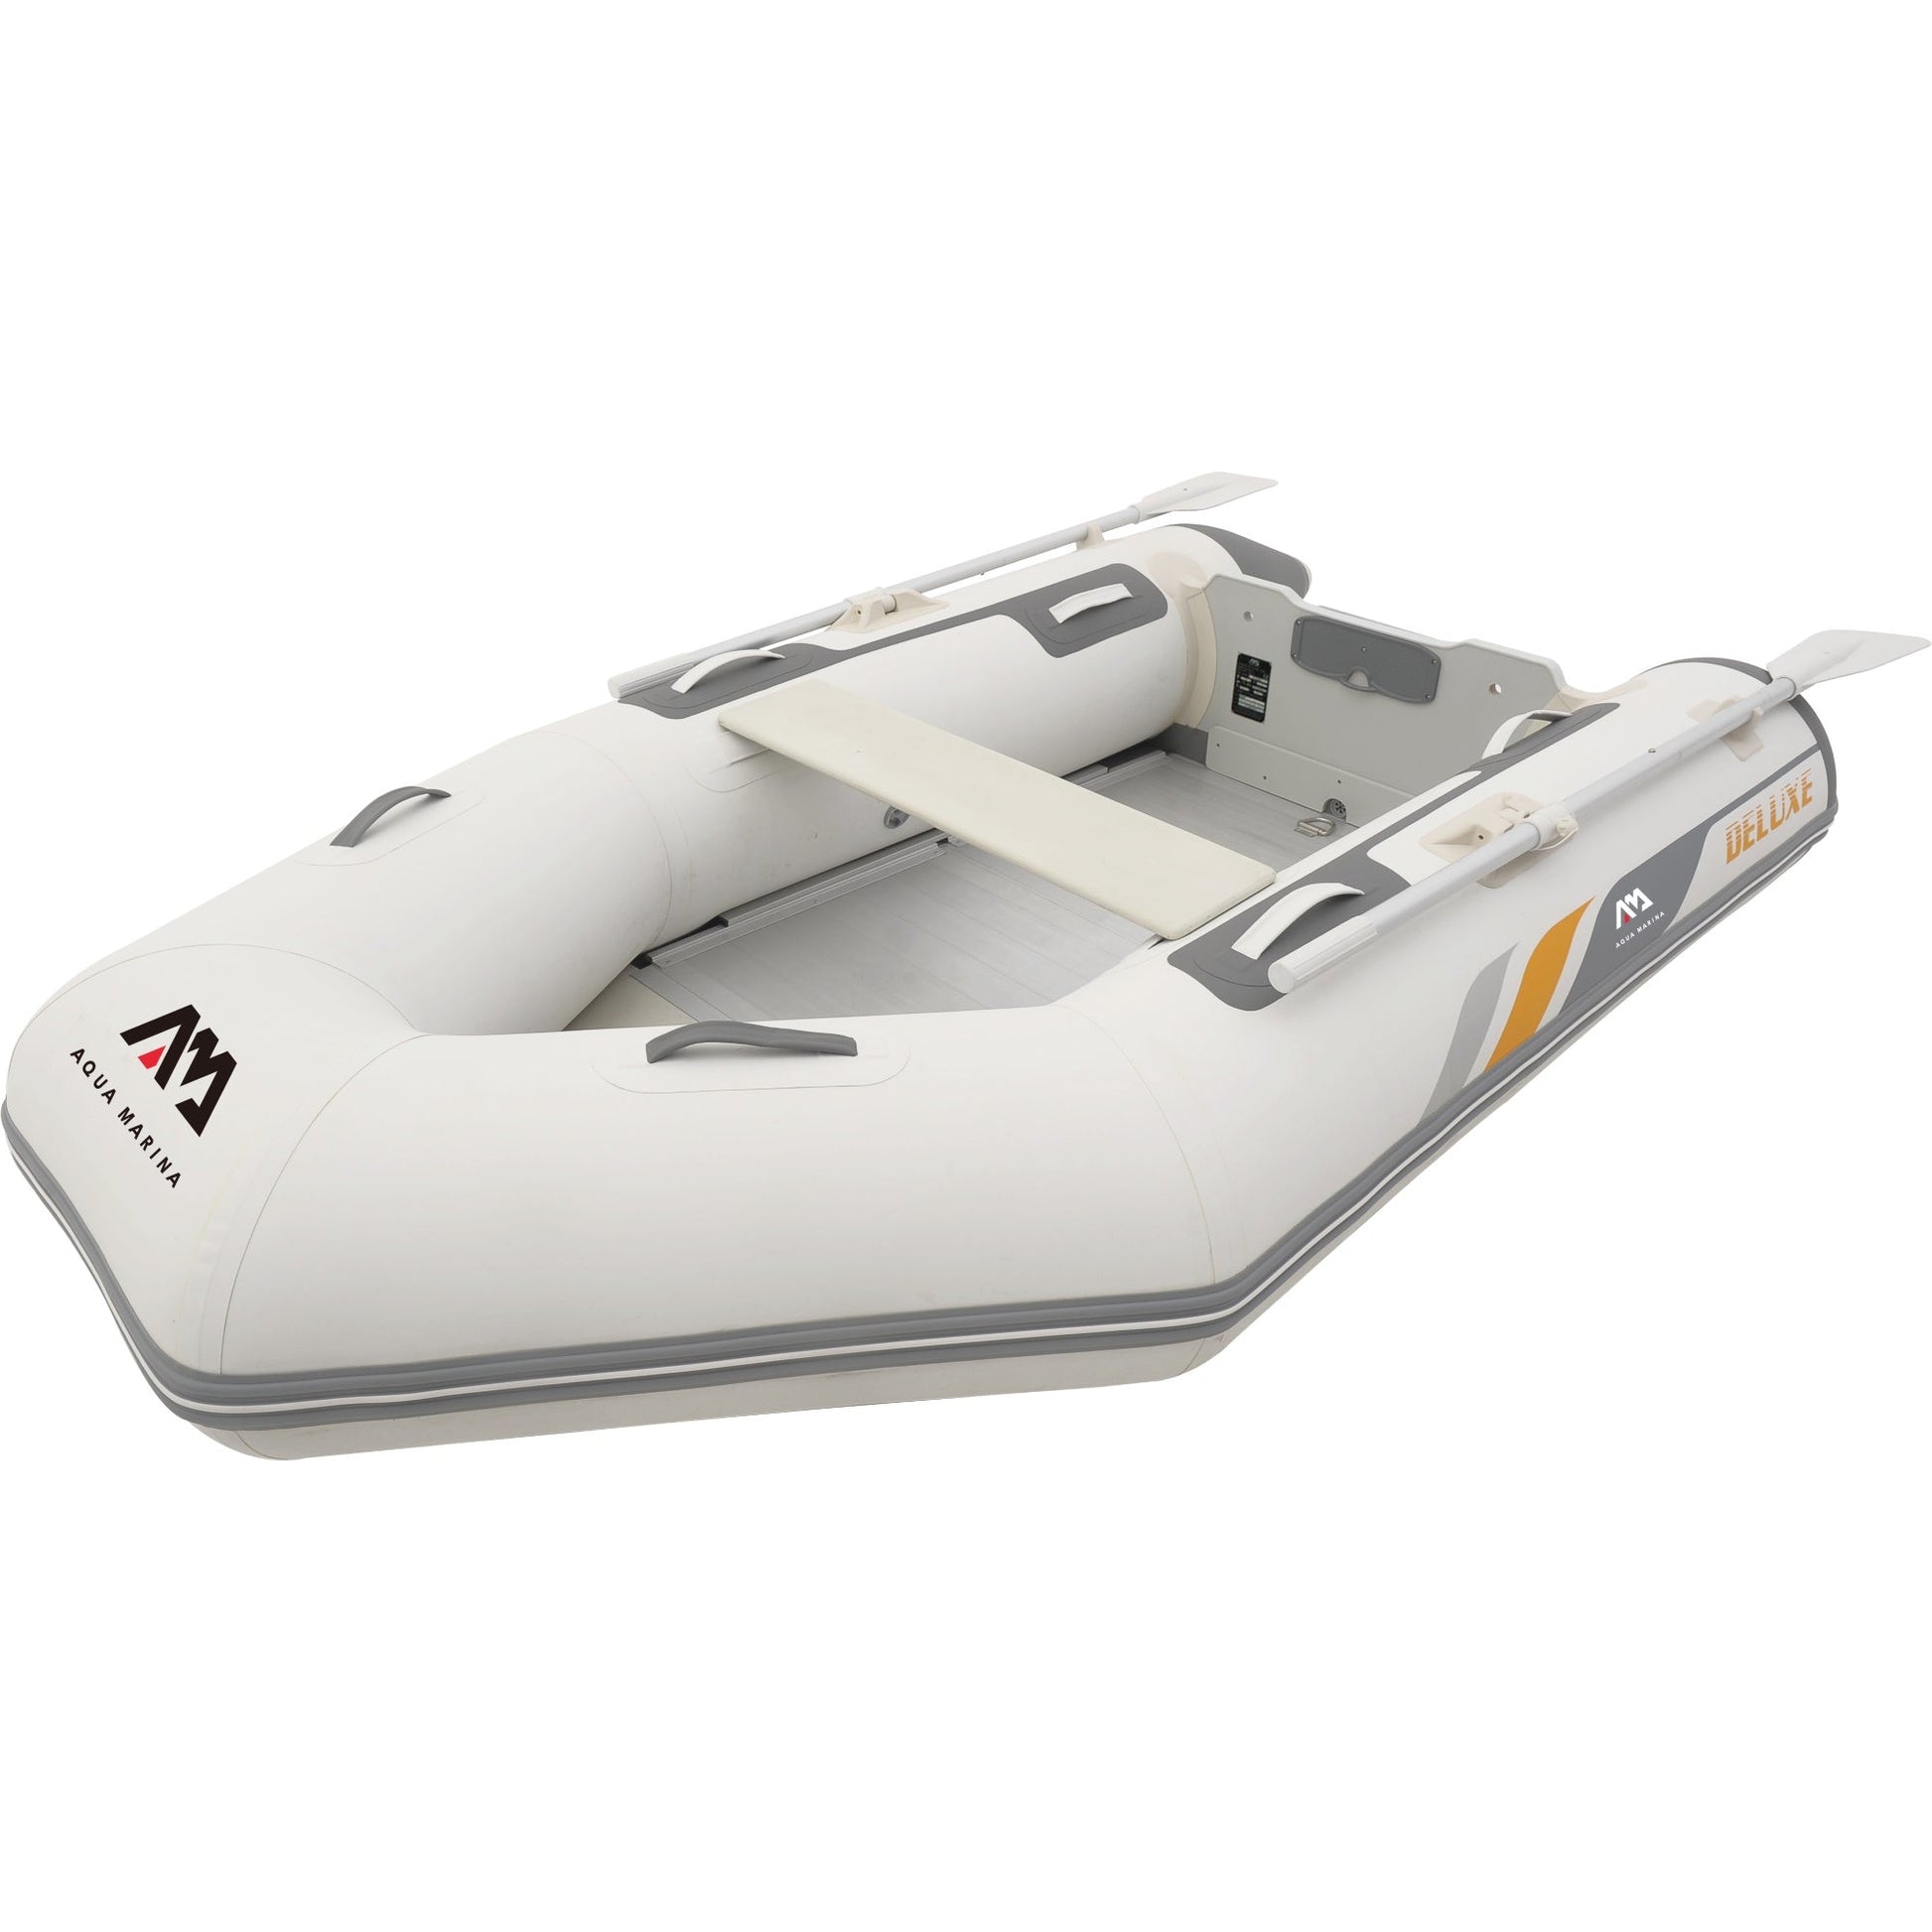 A-Deluxe 2.77m Inflatable Speed Boat (Aluminum Deck) – Aqua Fun